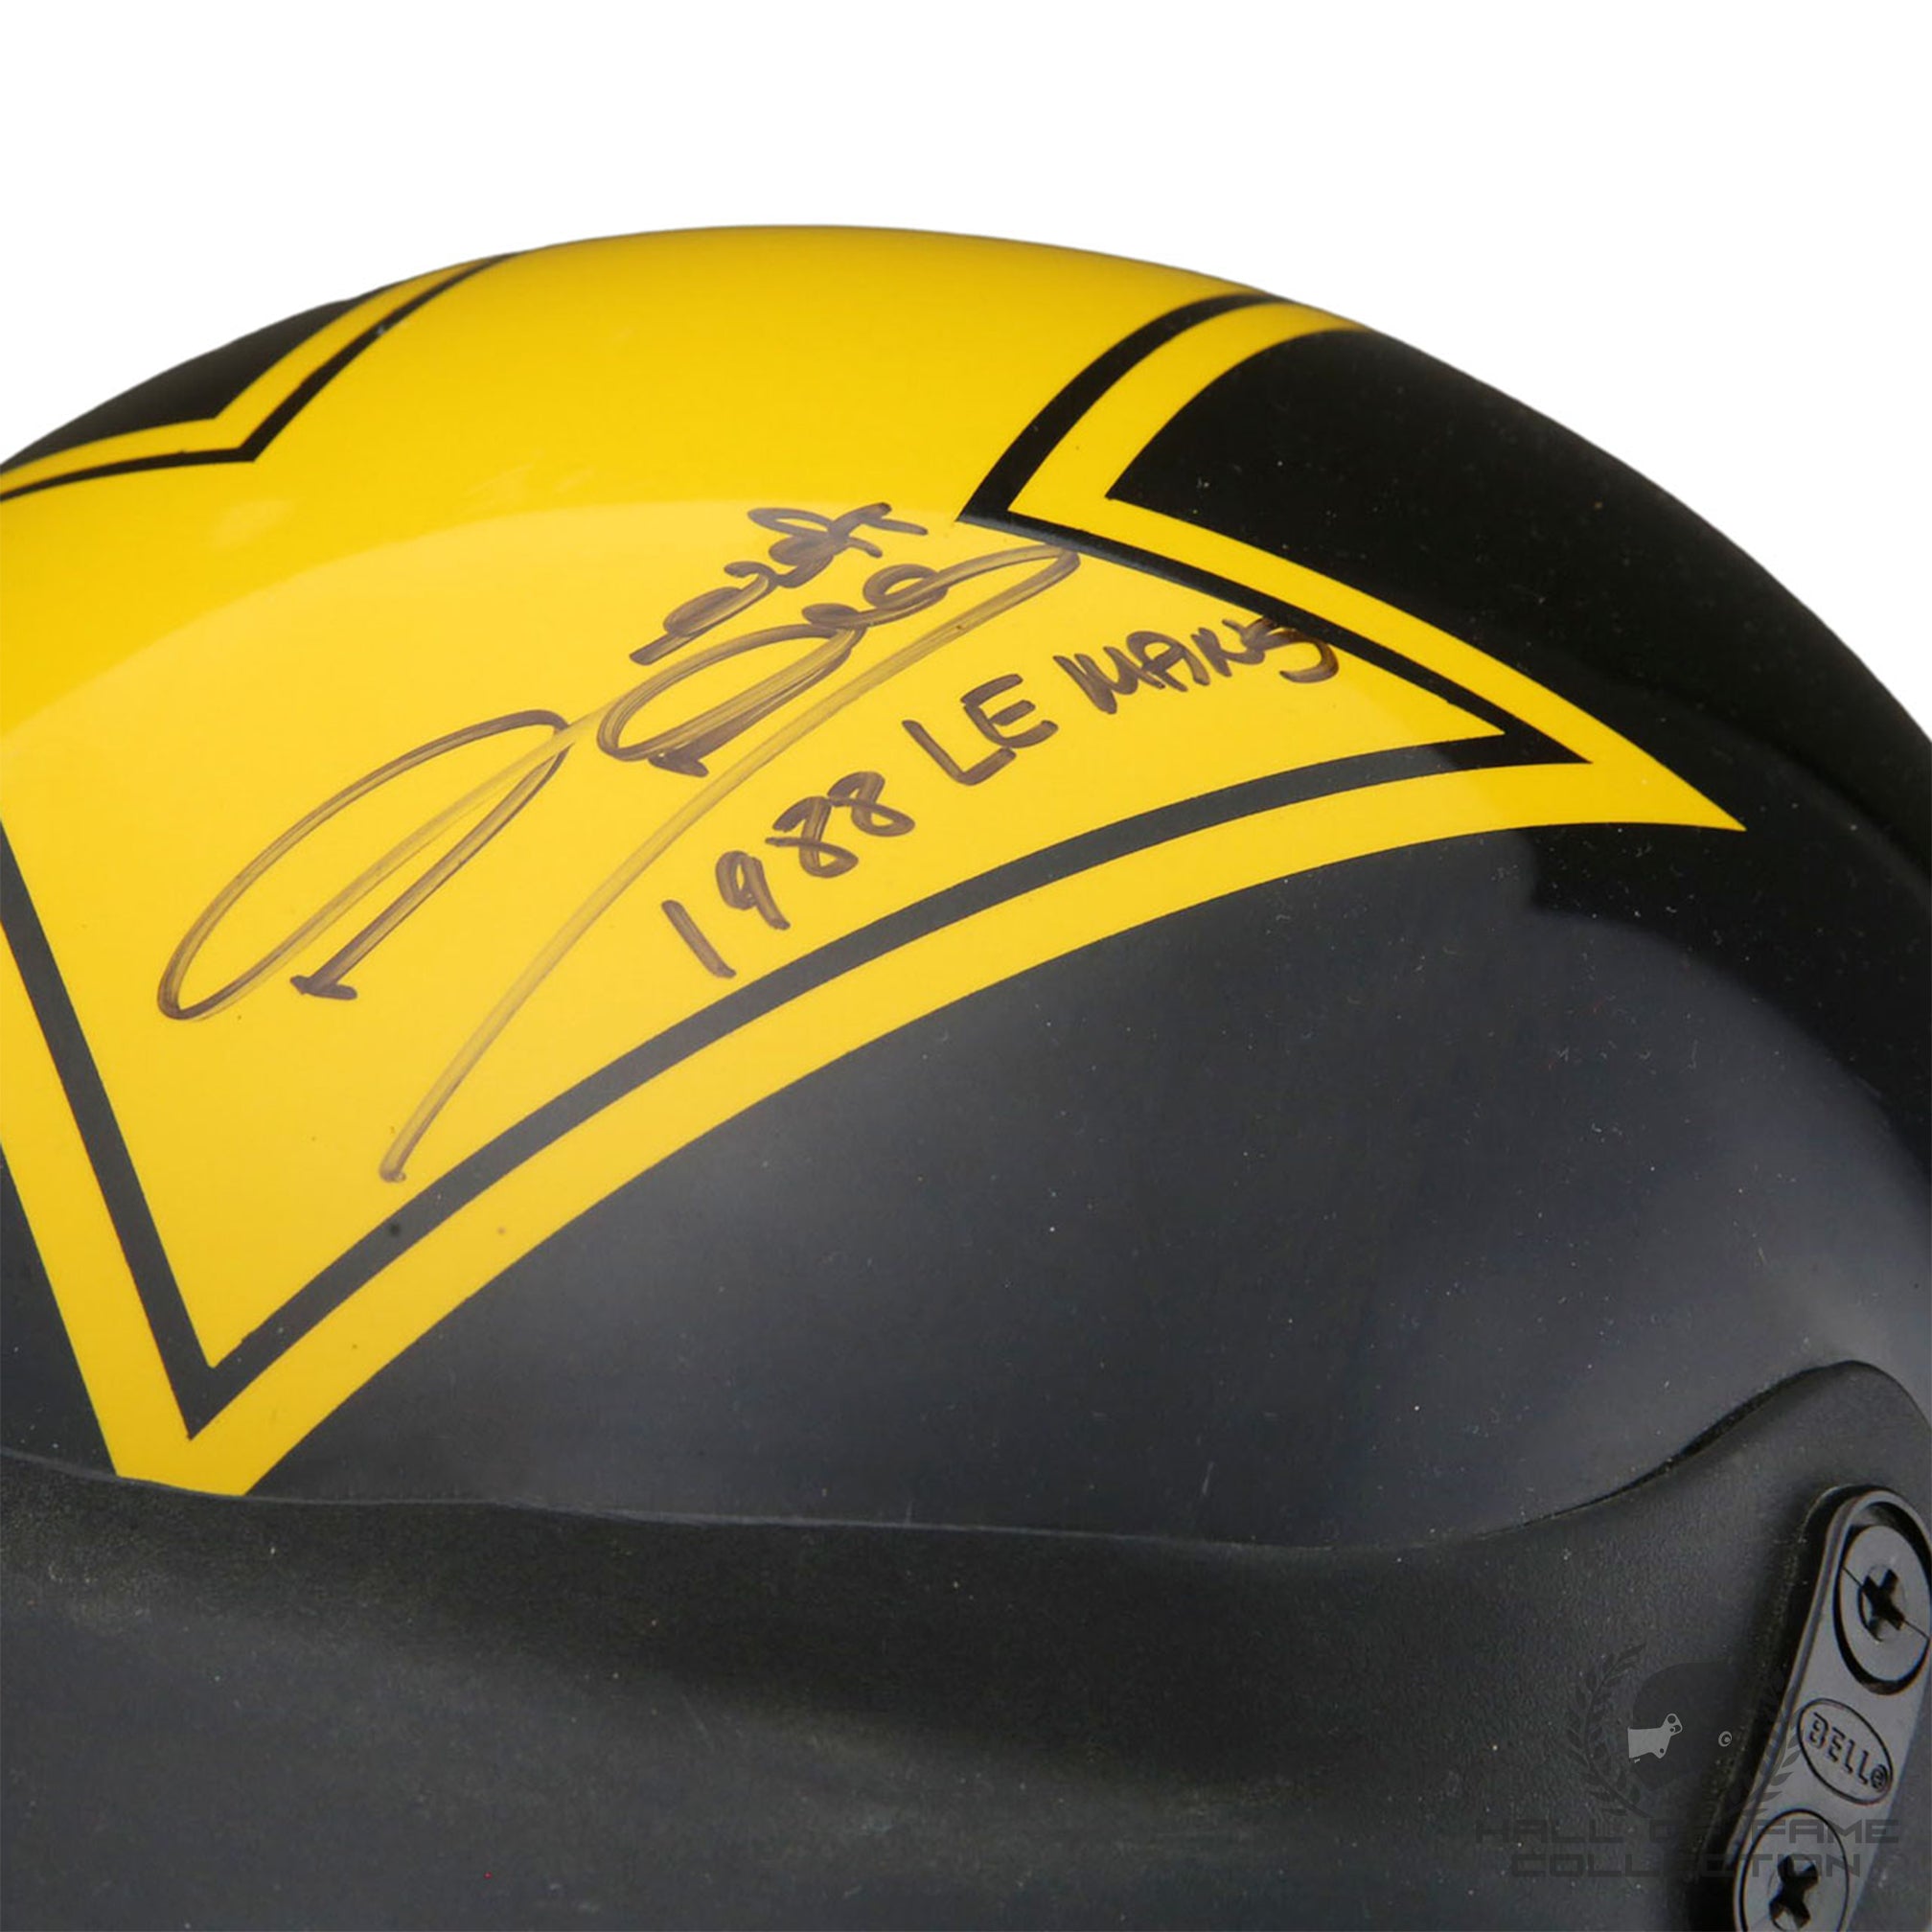 1988 Derek Daly Signed 24 Hrs of Le Mans Race Used Silk Cut Jaguar Sportscar Suit, Helmet + More